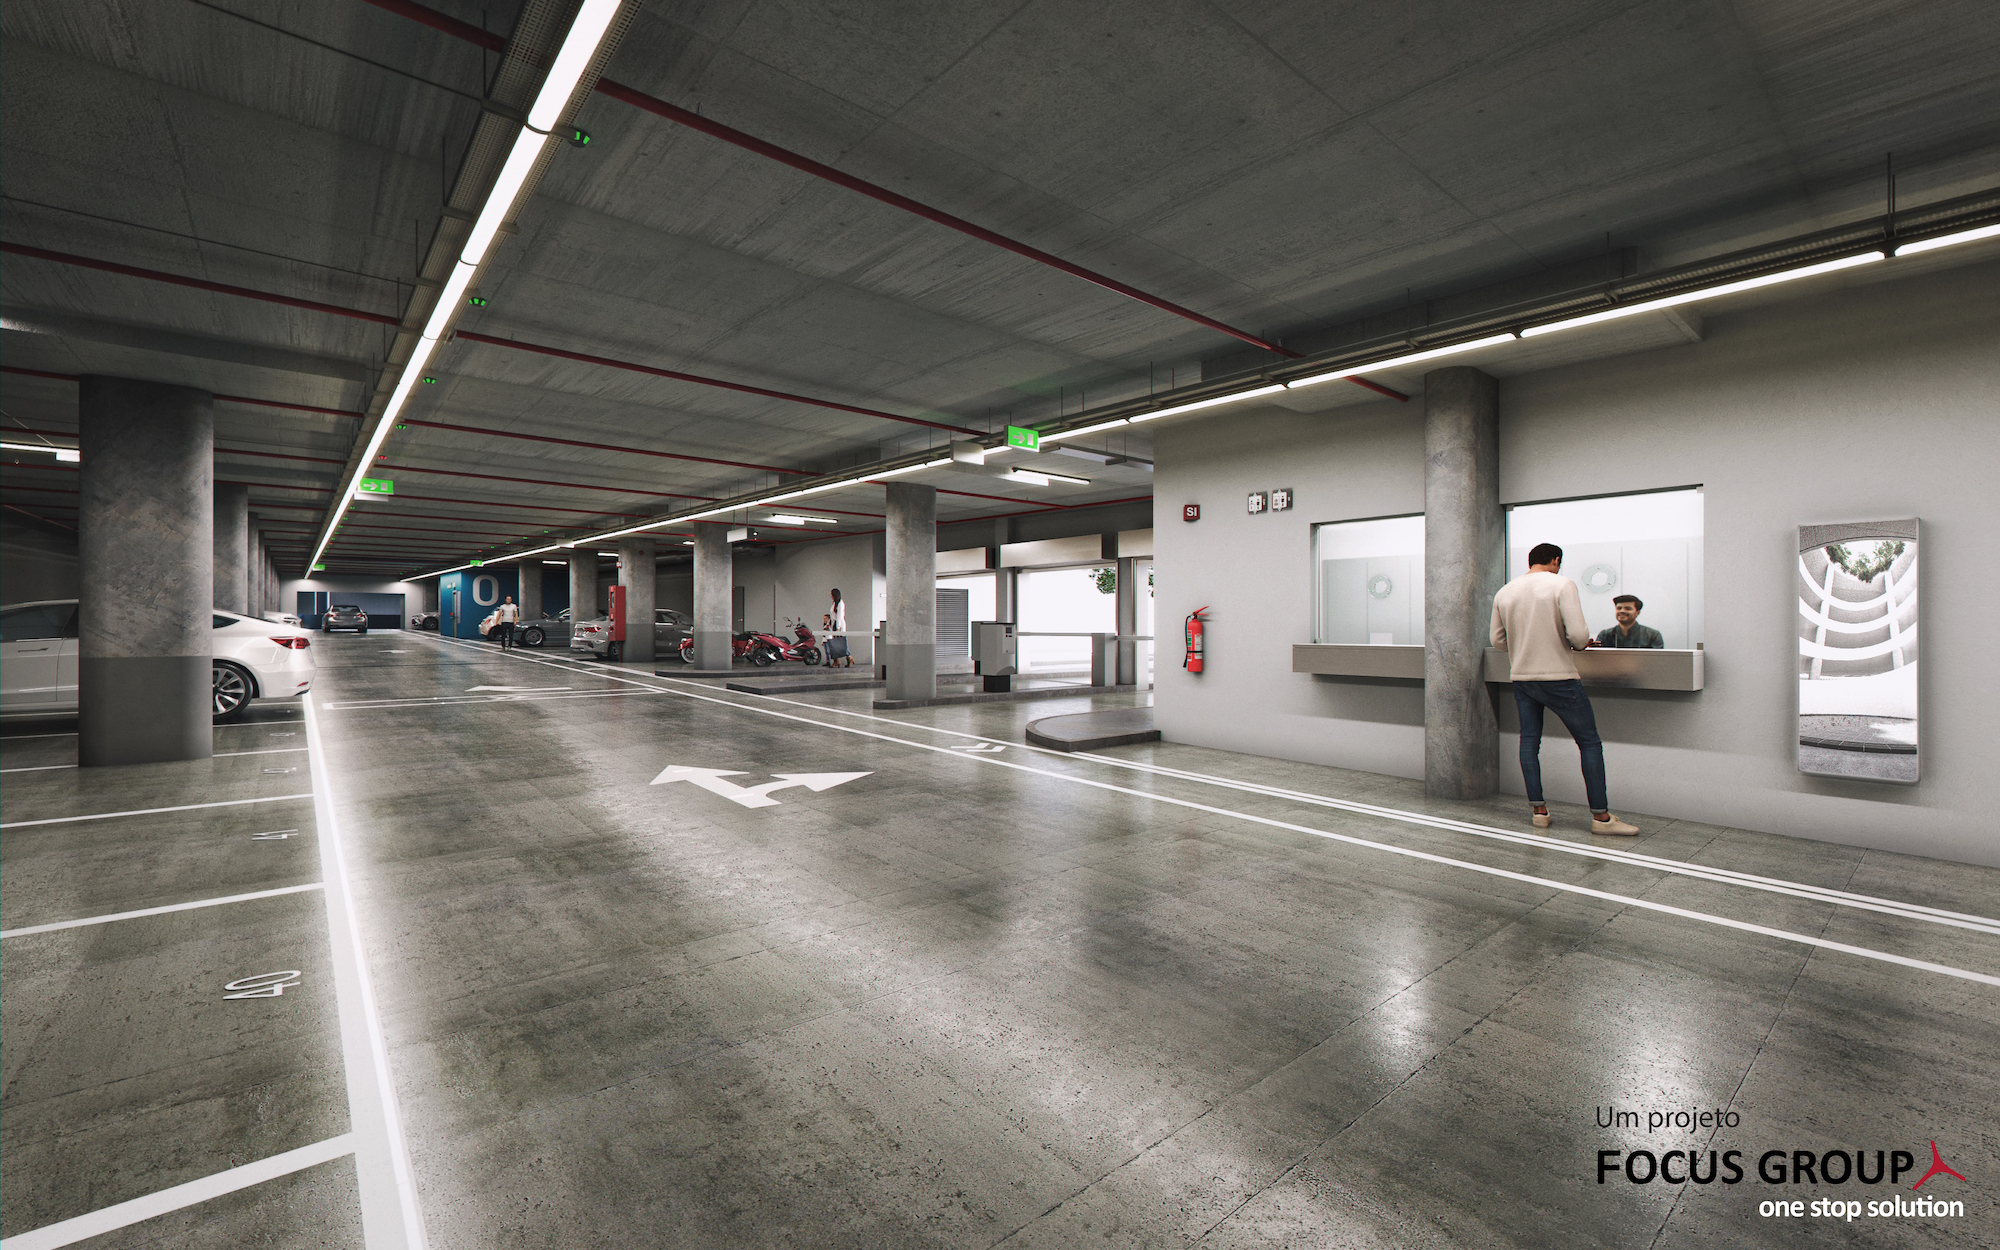 entrecampos terá parque de estacionamento subterrâneo com 586 lugares